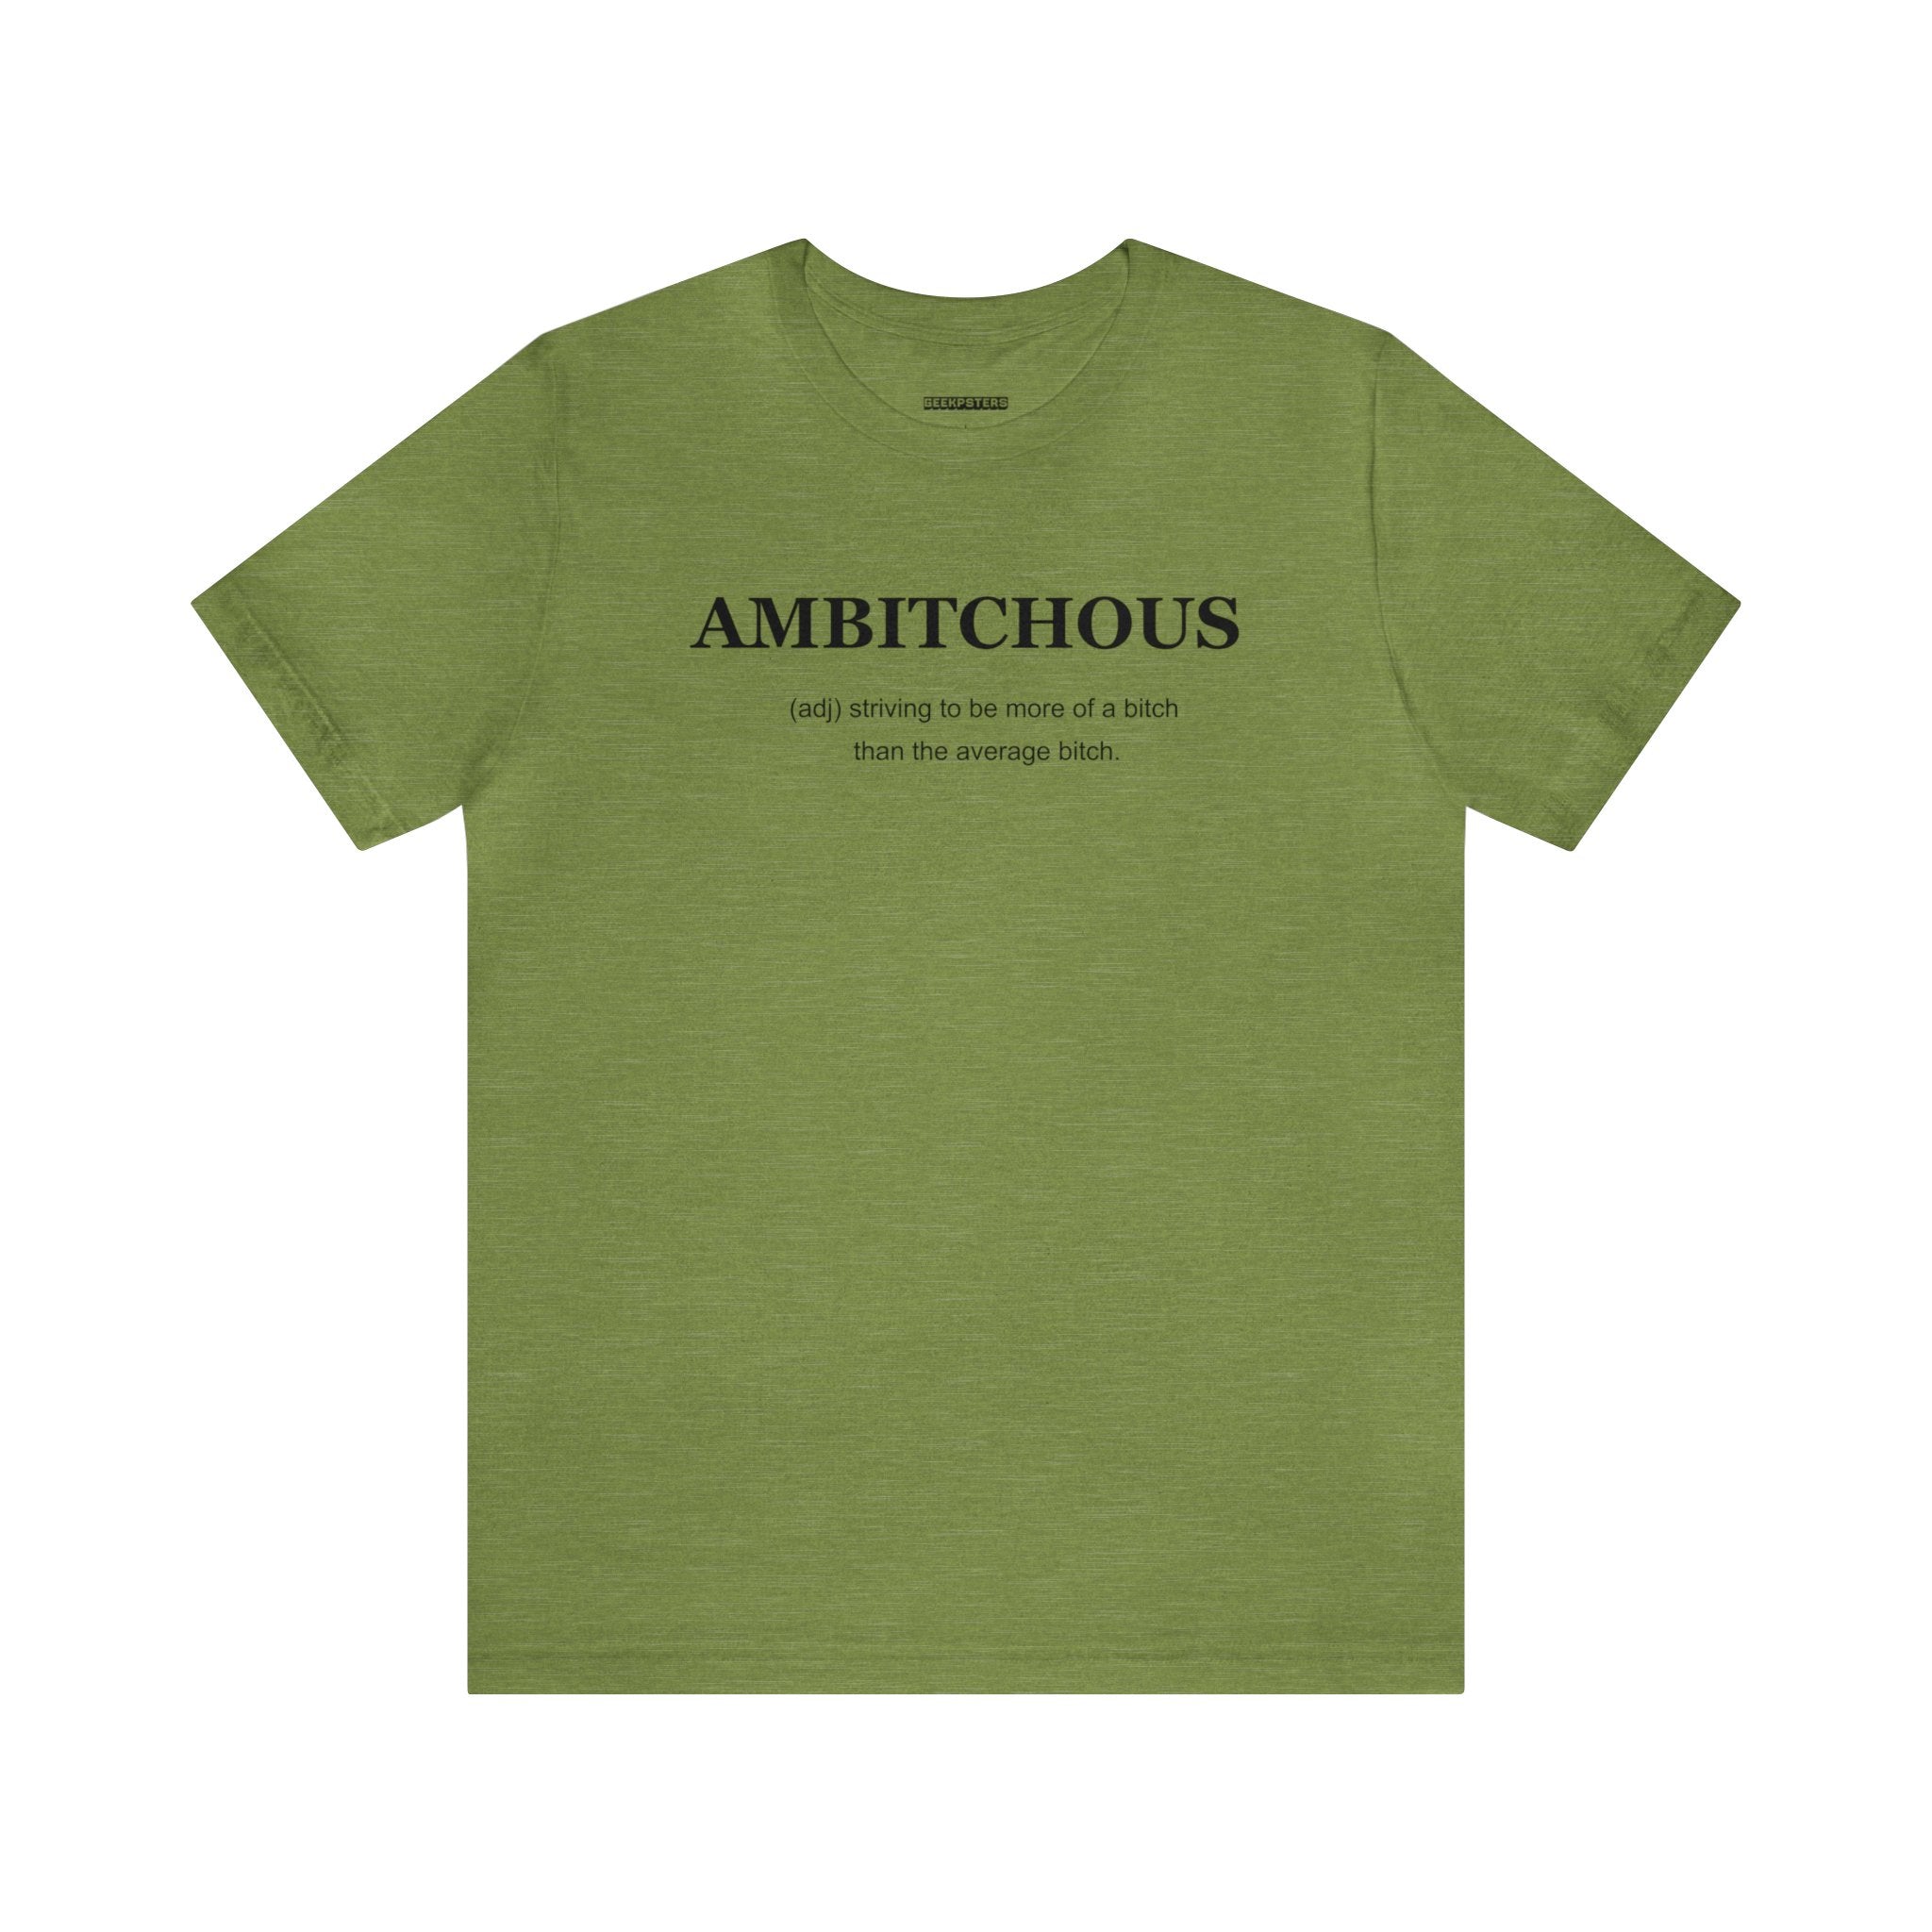 A green Ambitchious T-Shirt.